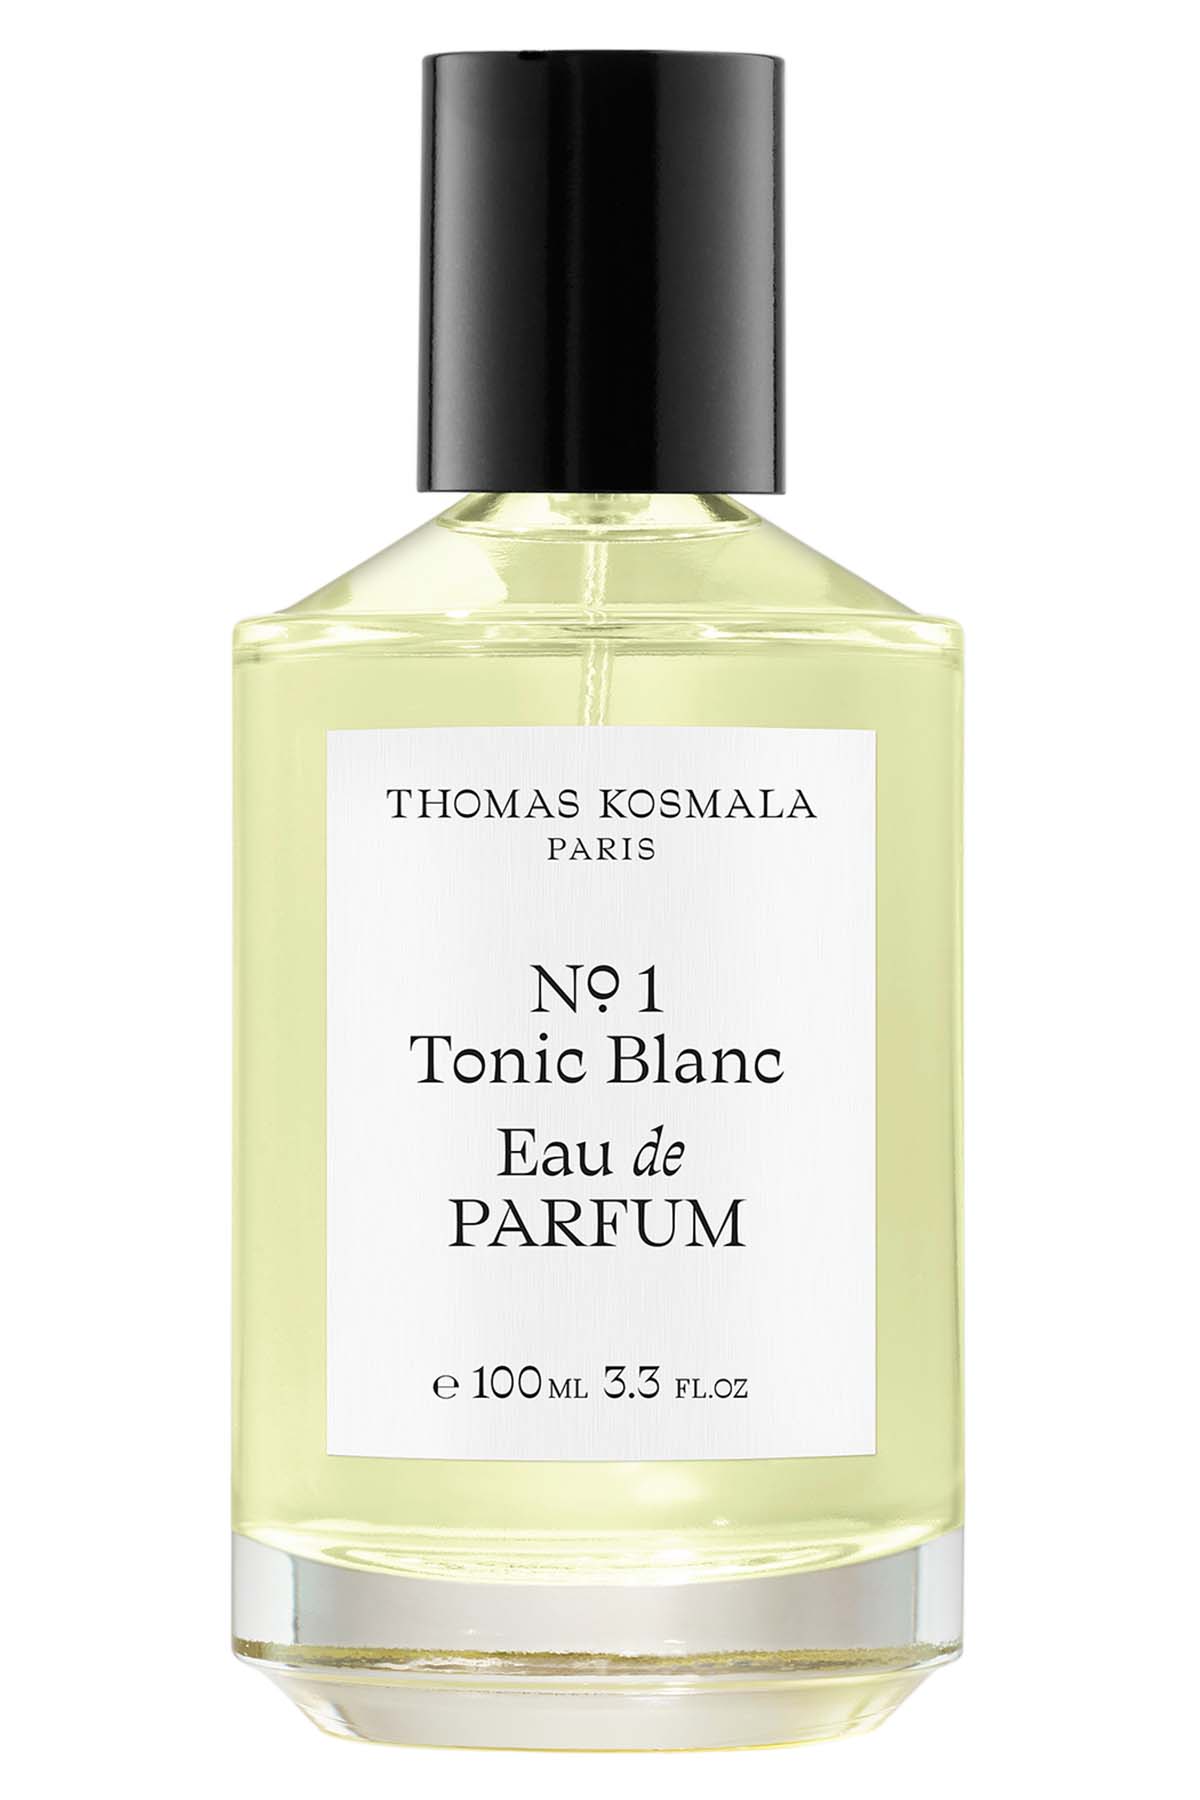 Thomas Kosmala No. 1 Tonic Blanc Eau de Parfum